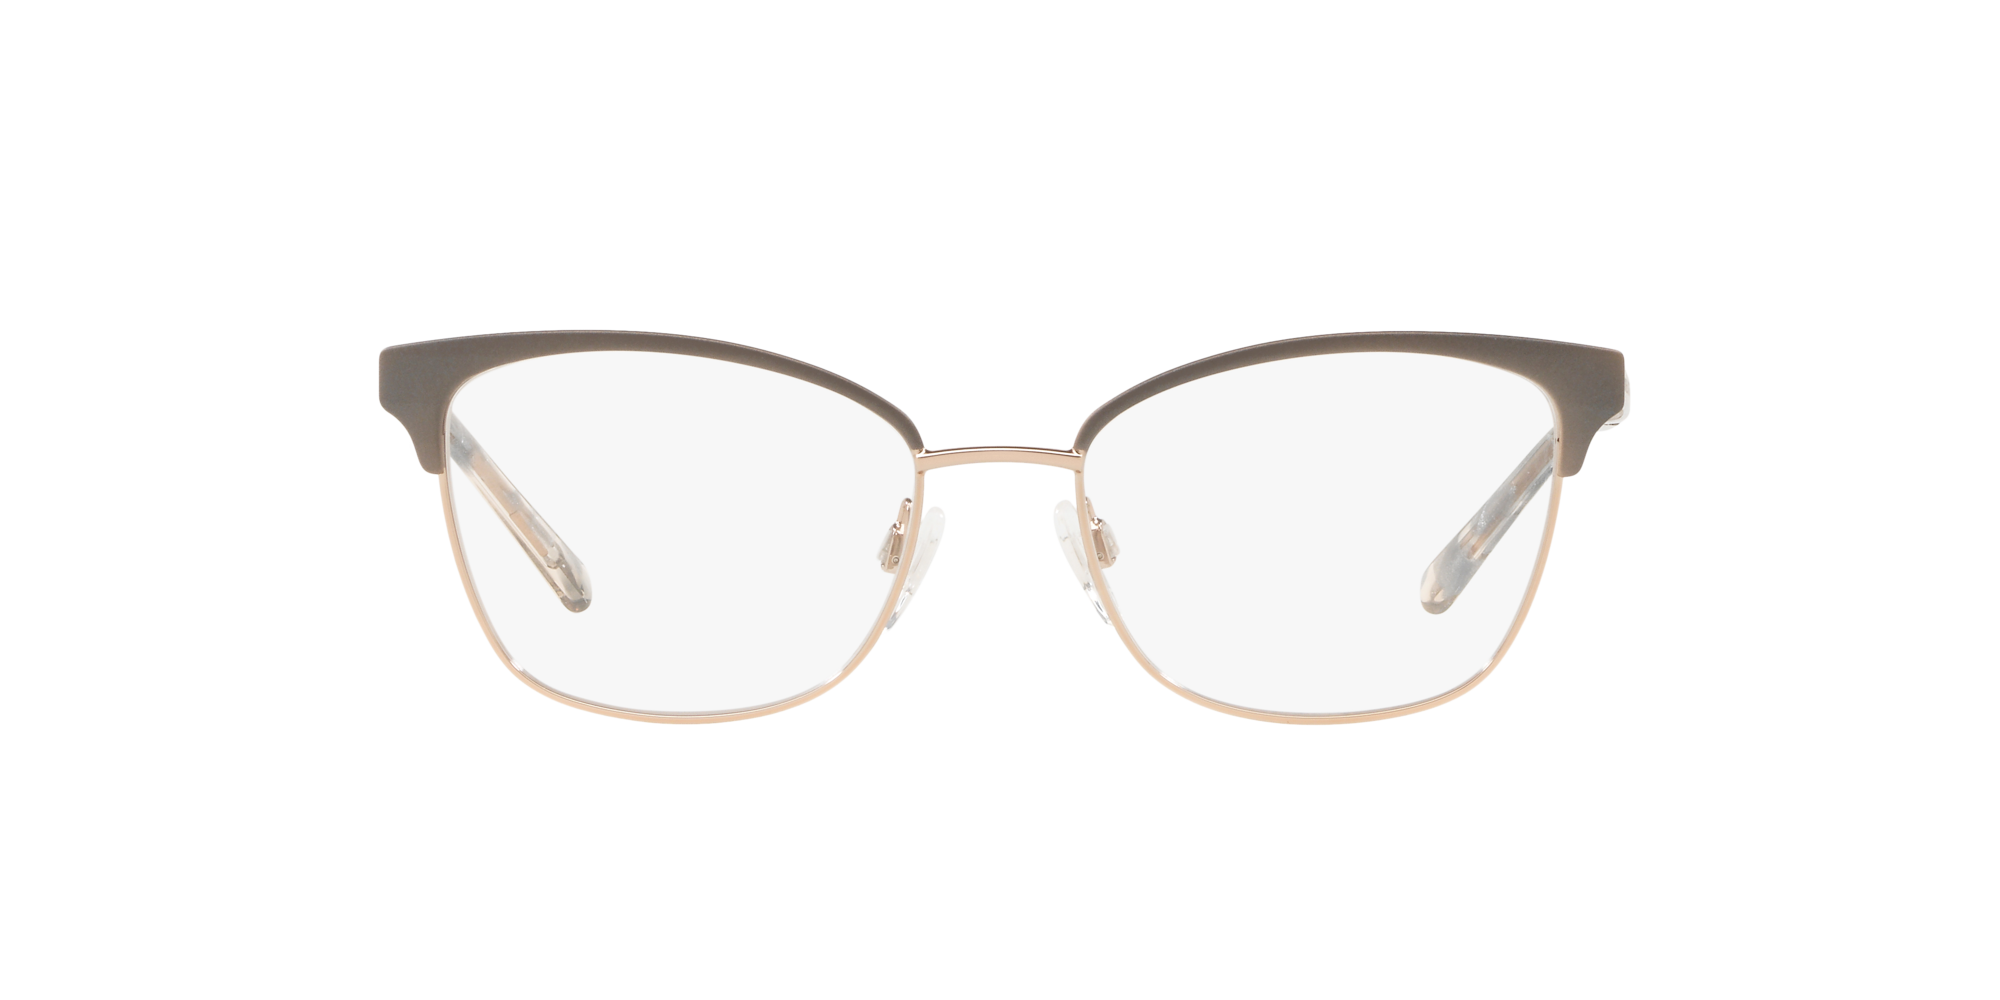 michael kors eyeglasses mk3012